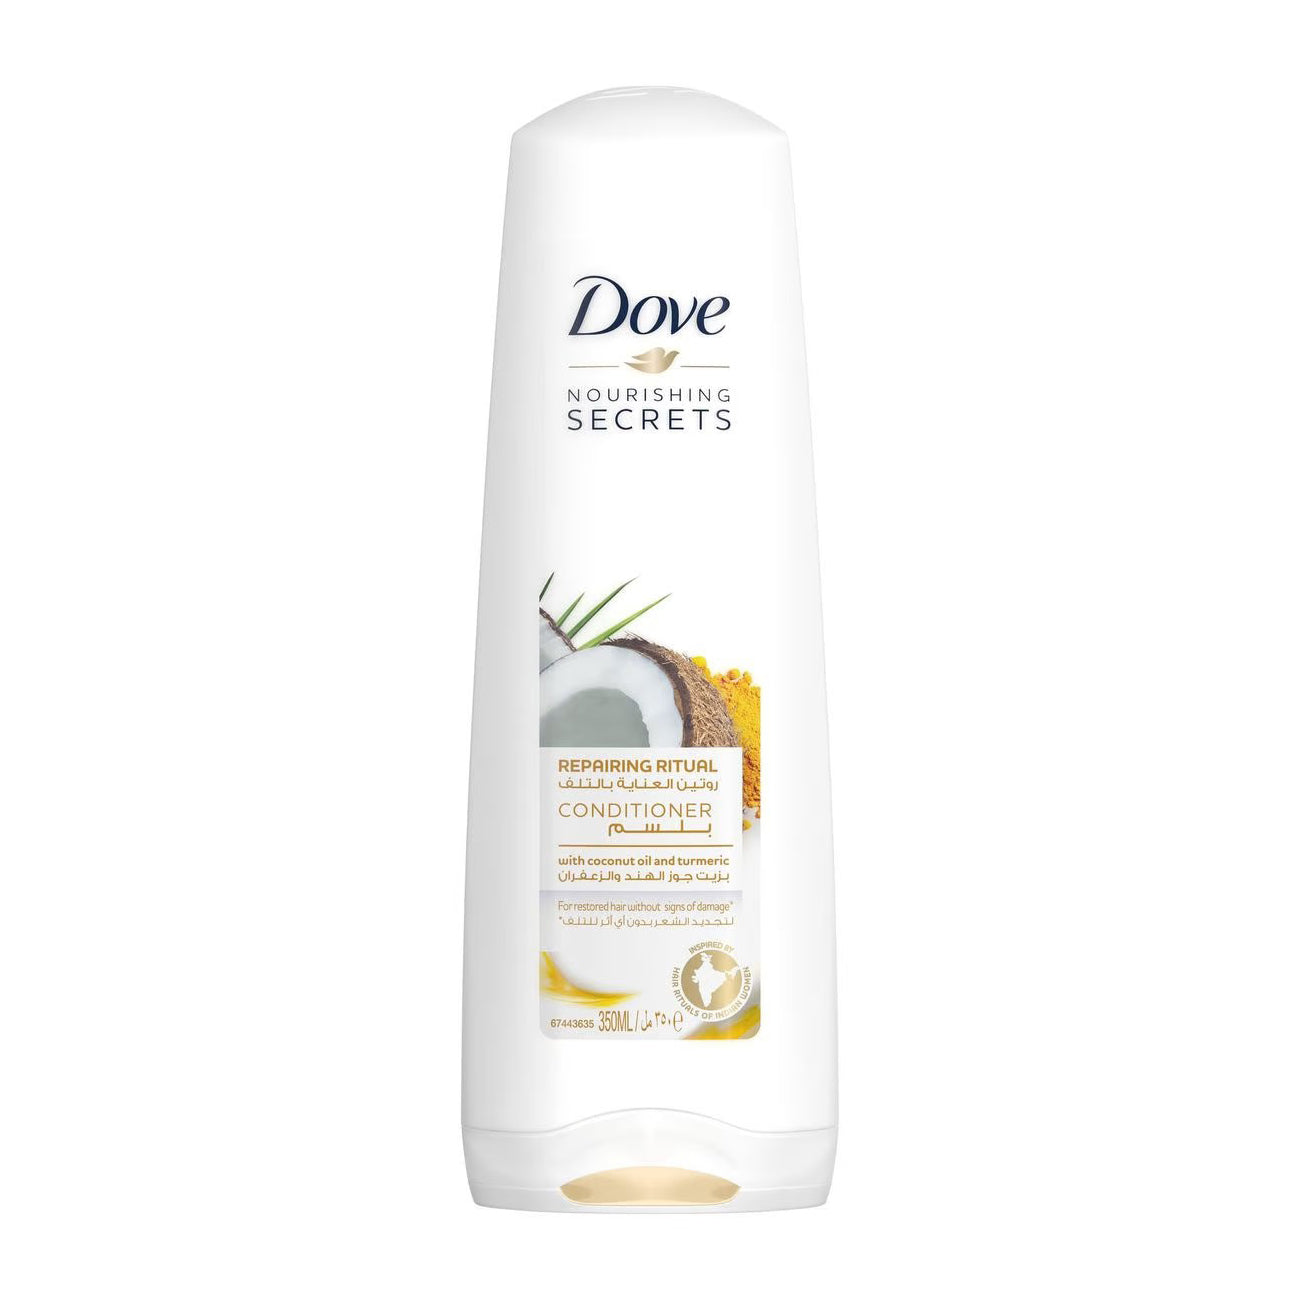 Dove Nourishing Secrets Repairing Ritual Conditioner 350ml